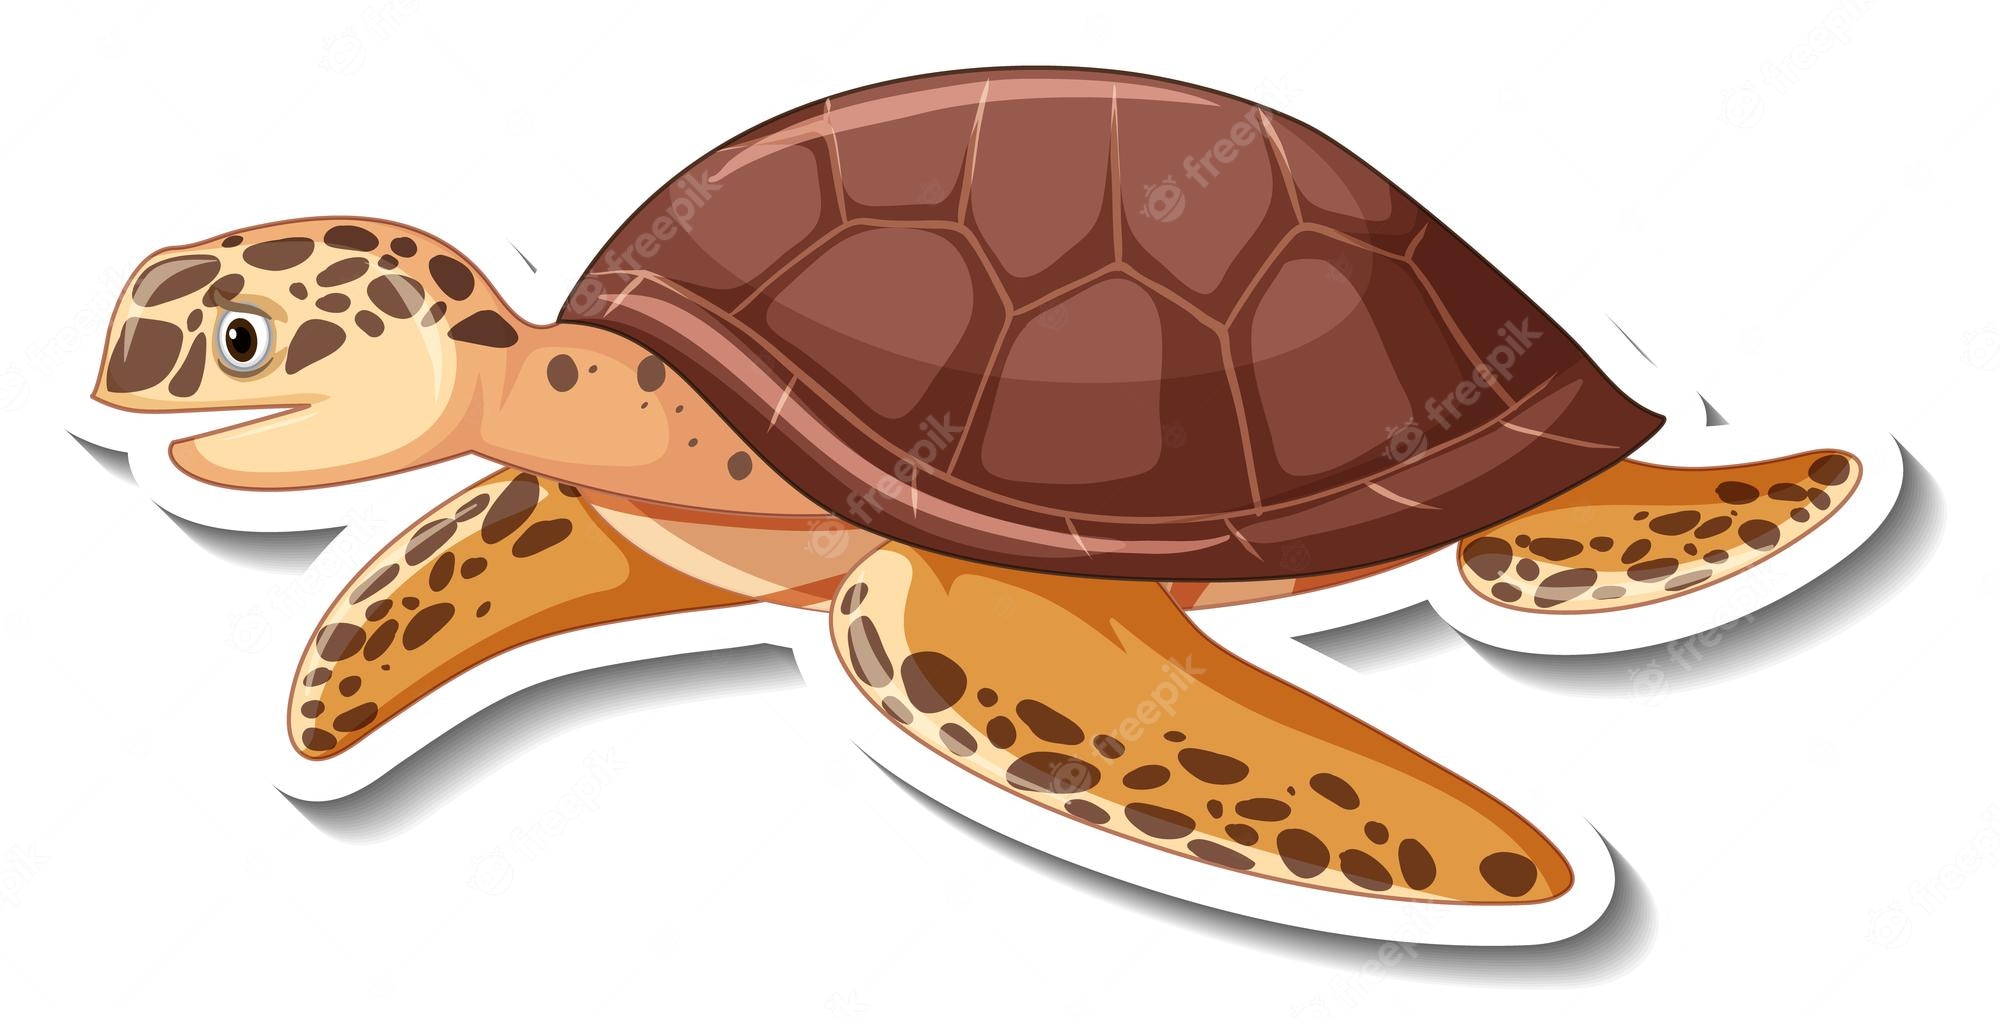 Sea Turtle clipart, Sea Turtle Sublimation designs, Turtle watercolor ...